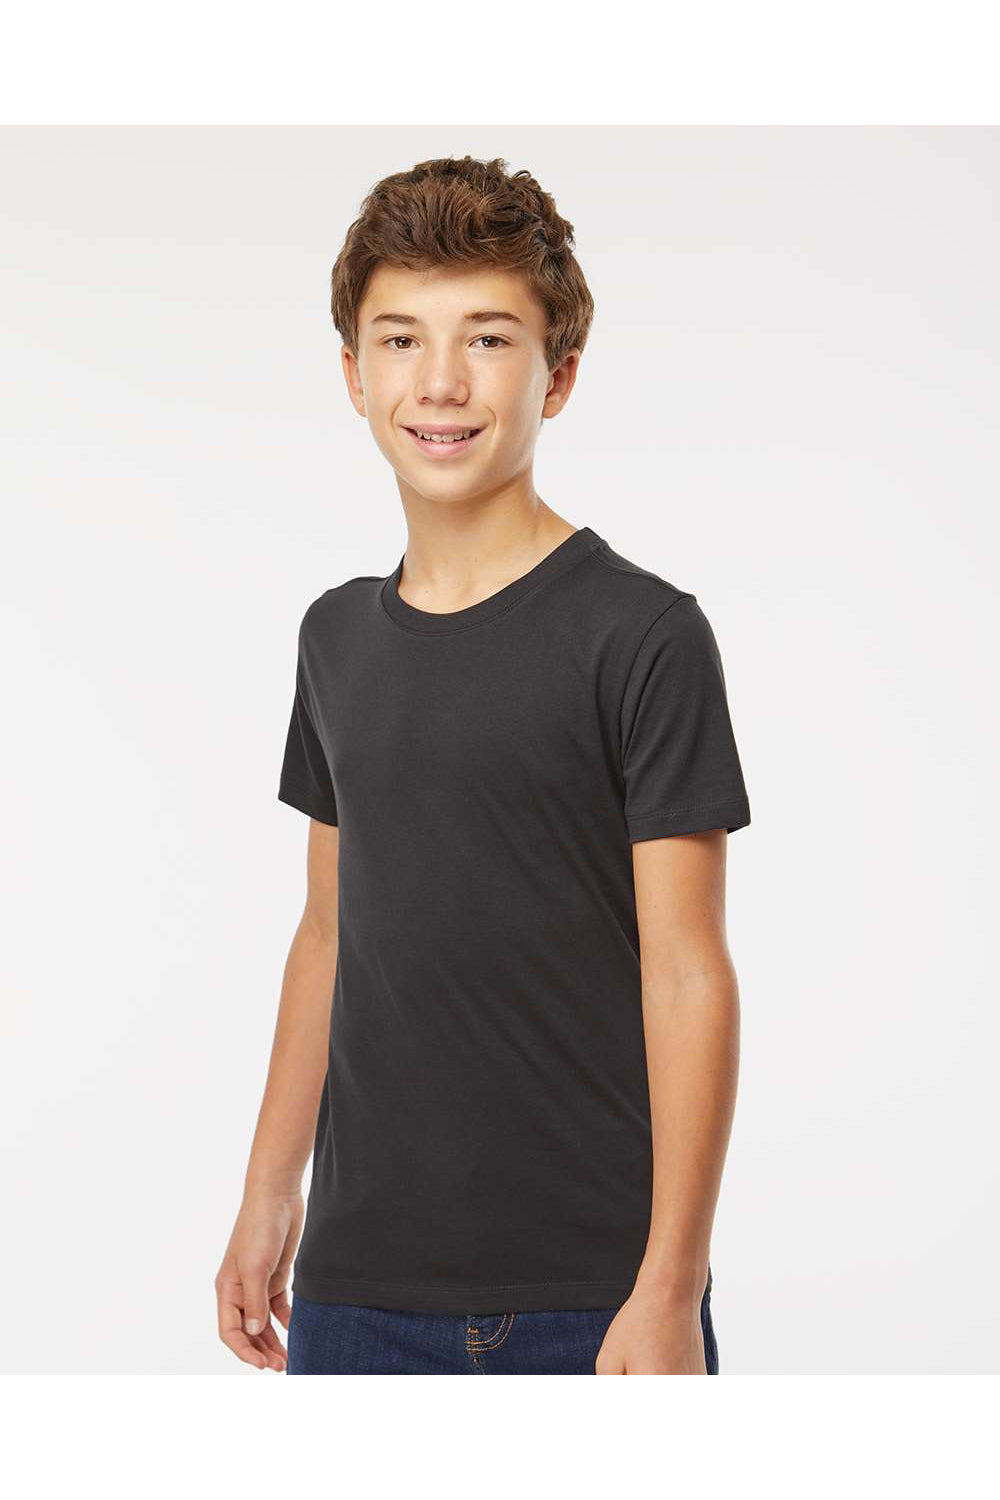 SoftShirts 402 Youth Organic Short Sleeve Crewneck T-Shirt Black Model Side